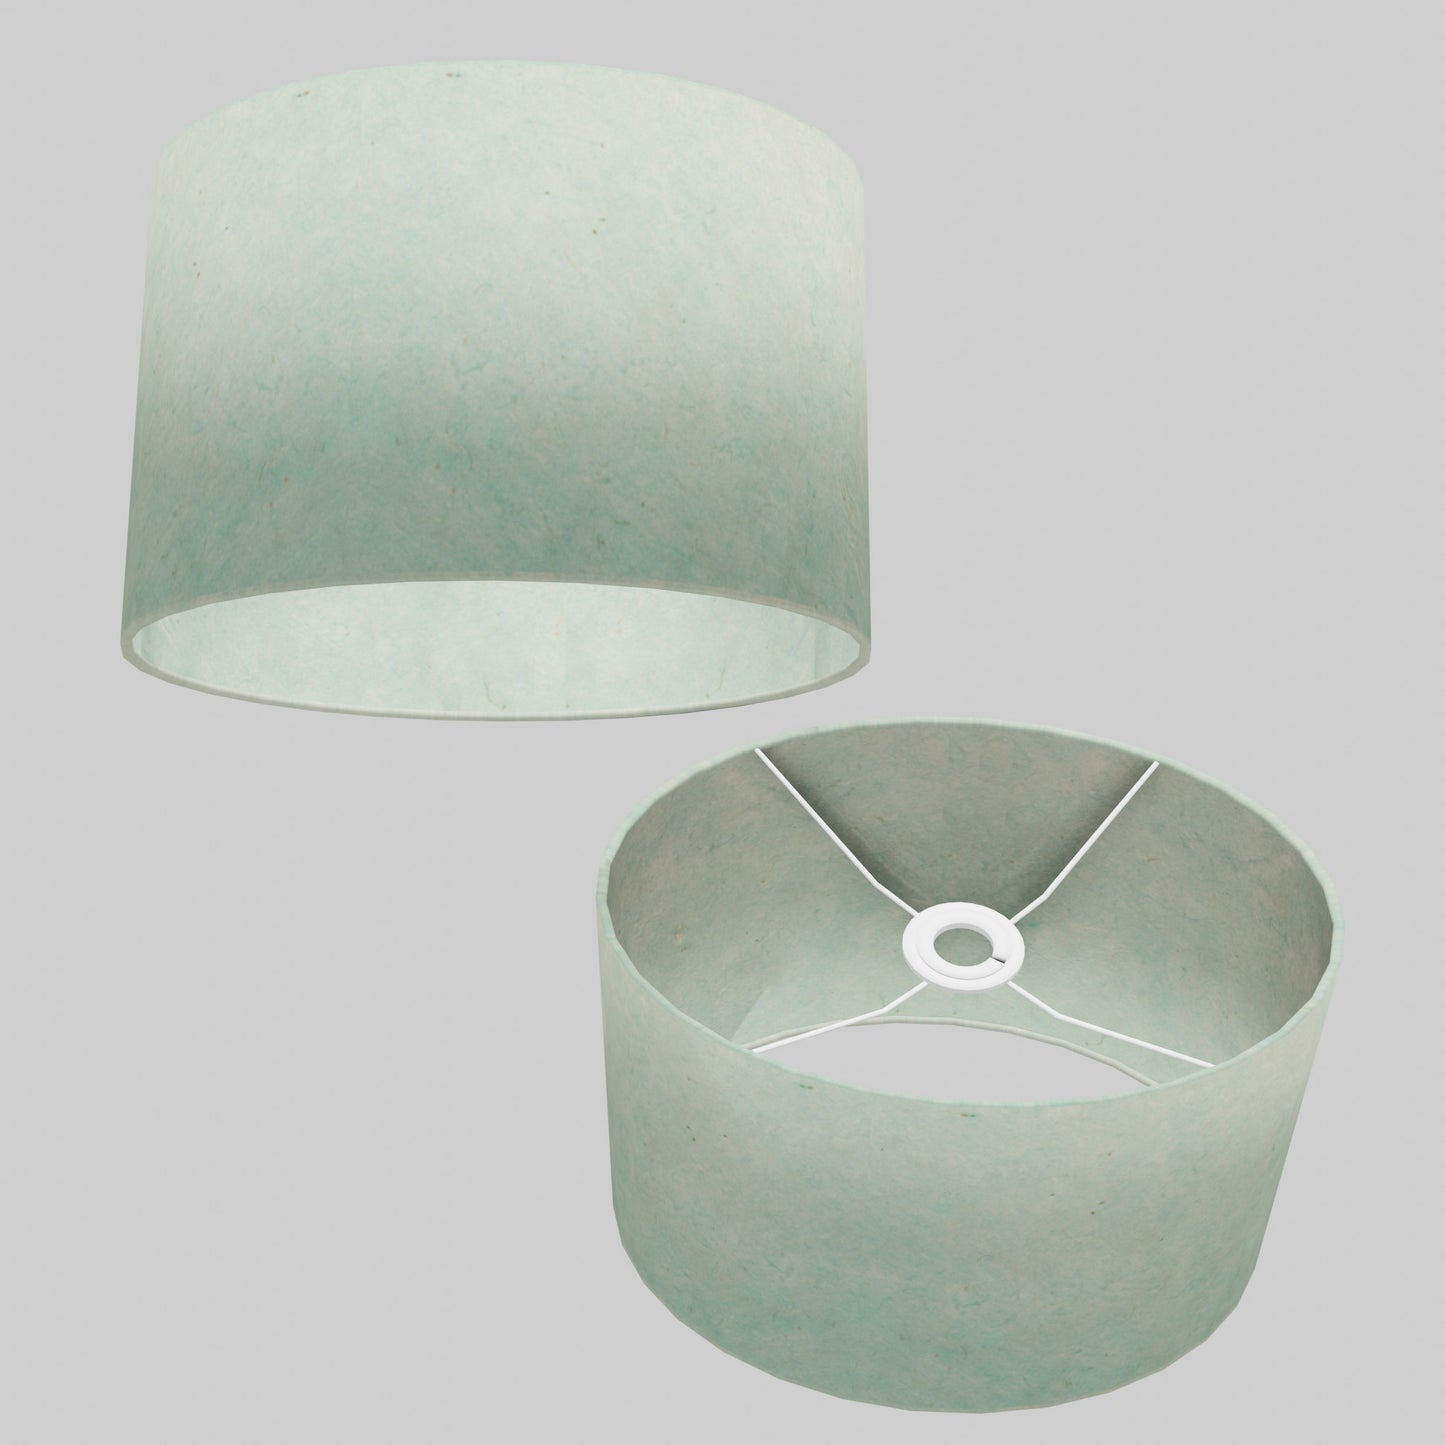 Oval Lamp Shade - P65 - Turquoise Lokta, 30cm(w) x 20cm(h) x 22cm(d)